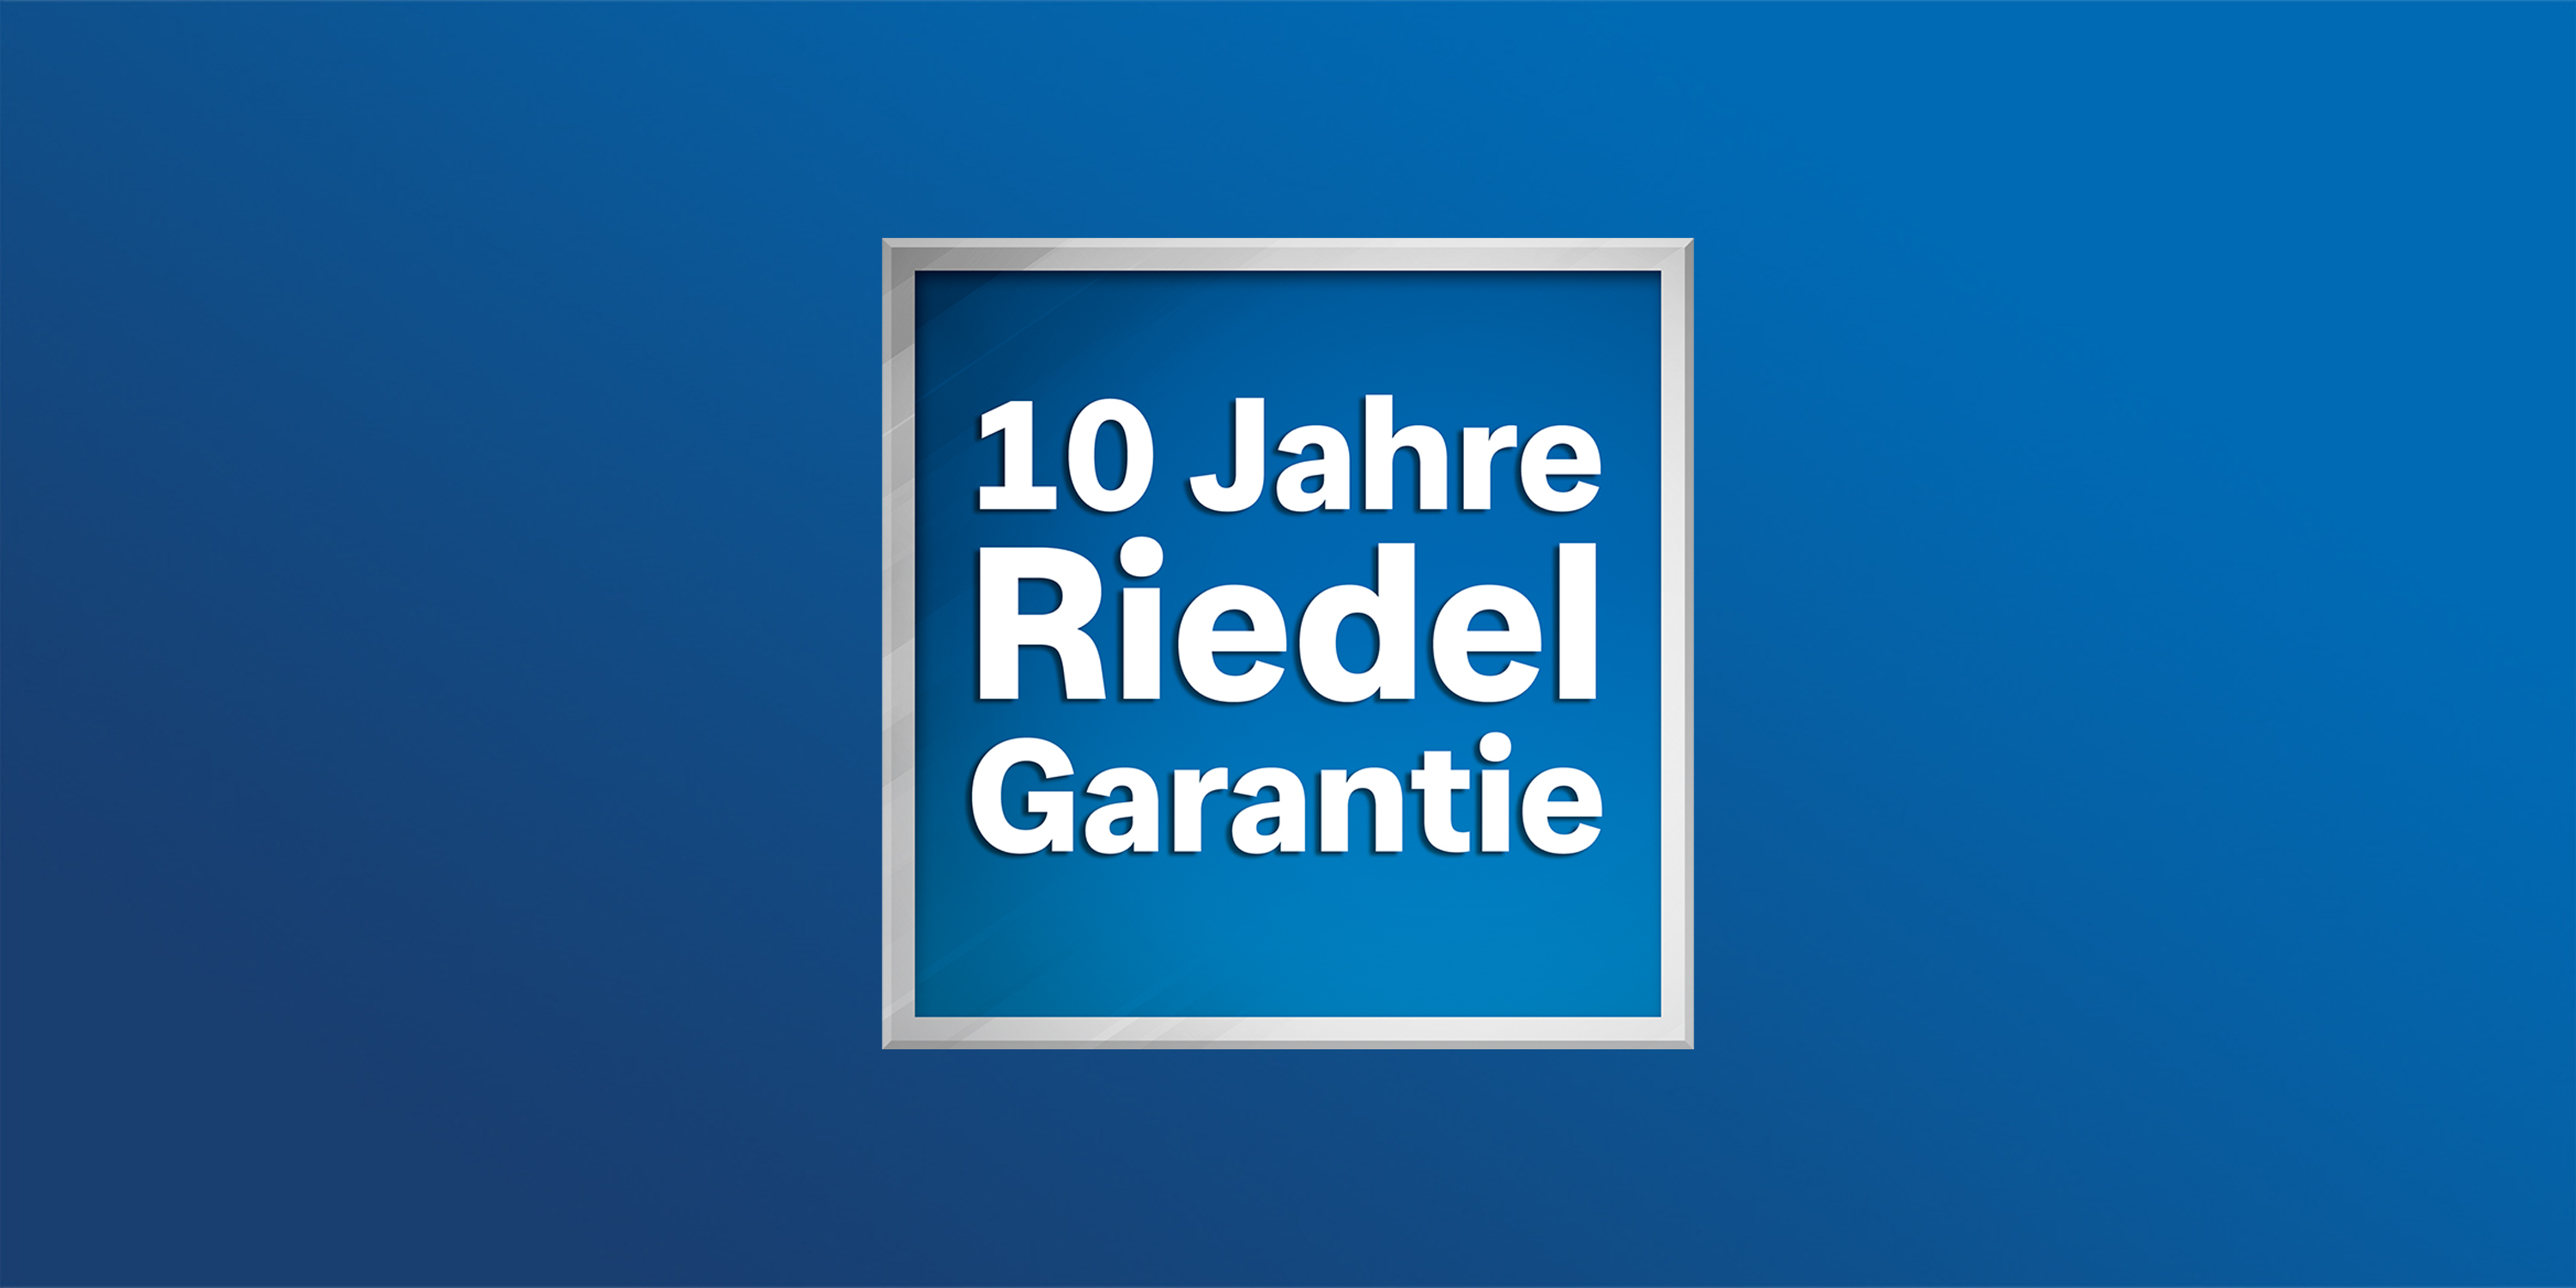 Riedel Kooling, Riedel Kältetechnik, 10 Jahre Garantie, bester Service, Bild